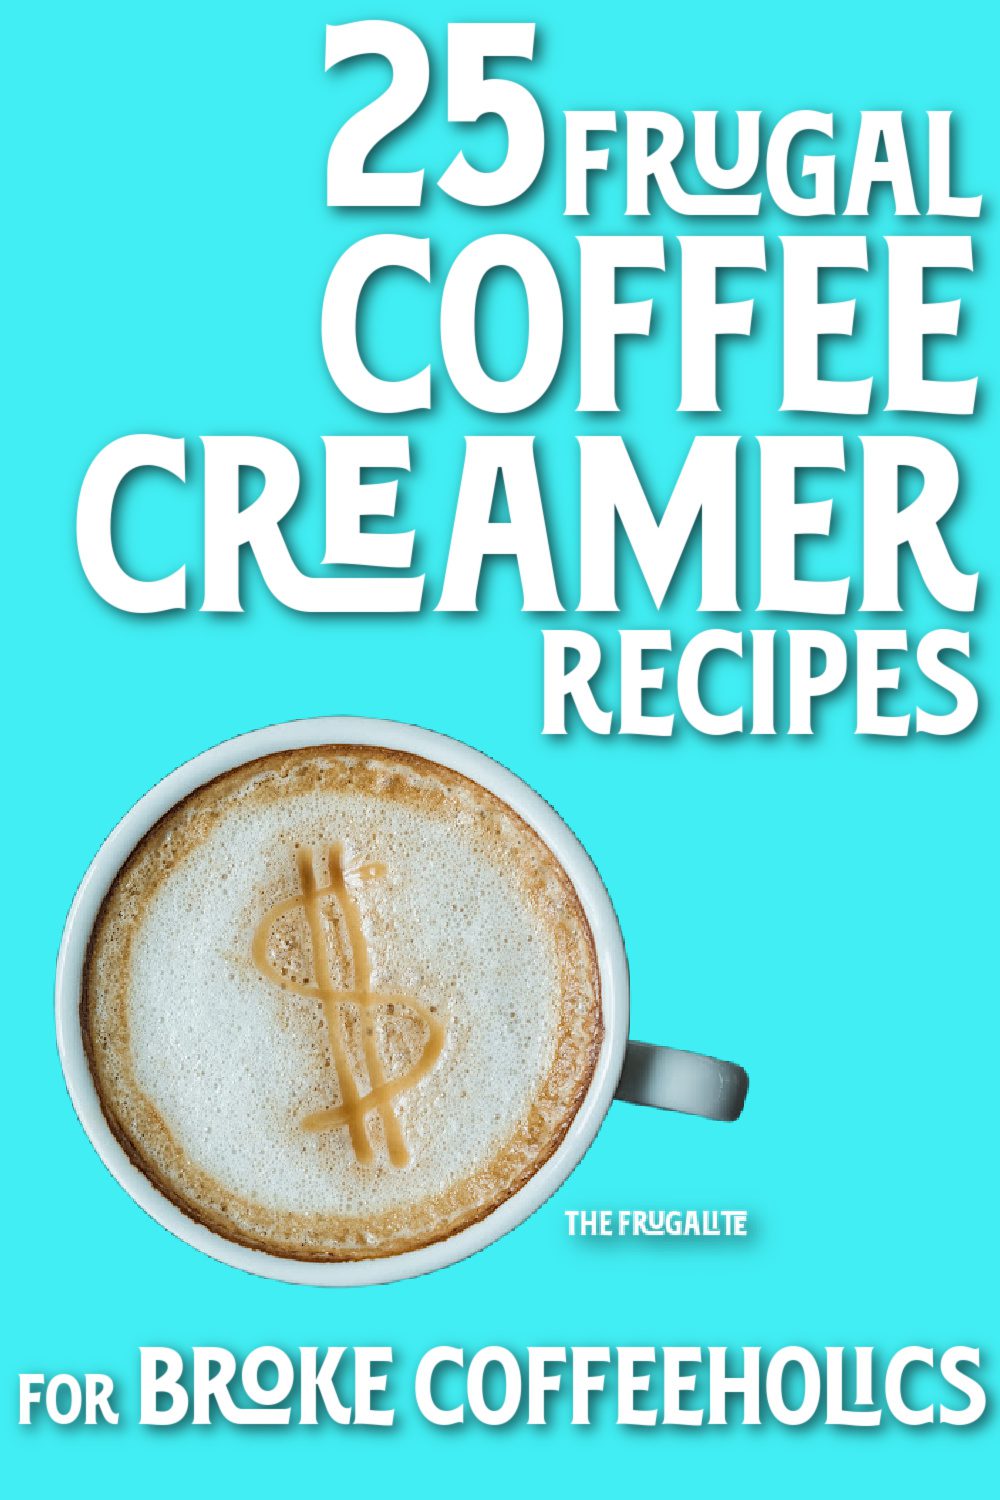 25 Frugal Coffee Creamer Recipes for Broke Coffeeholics